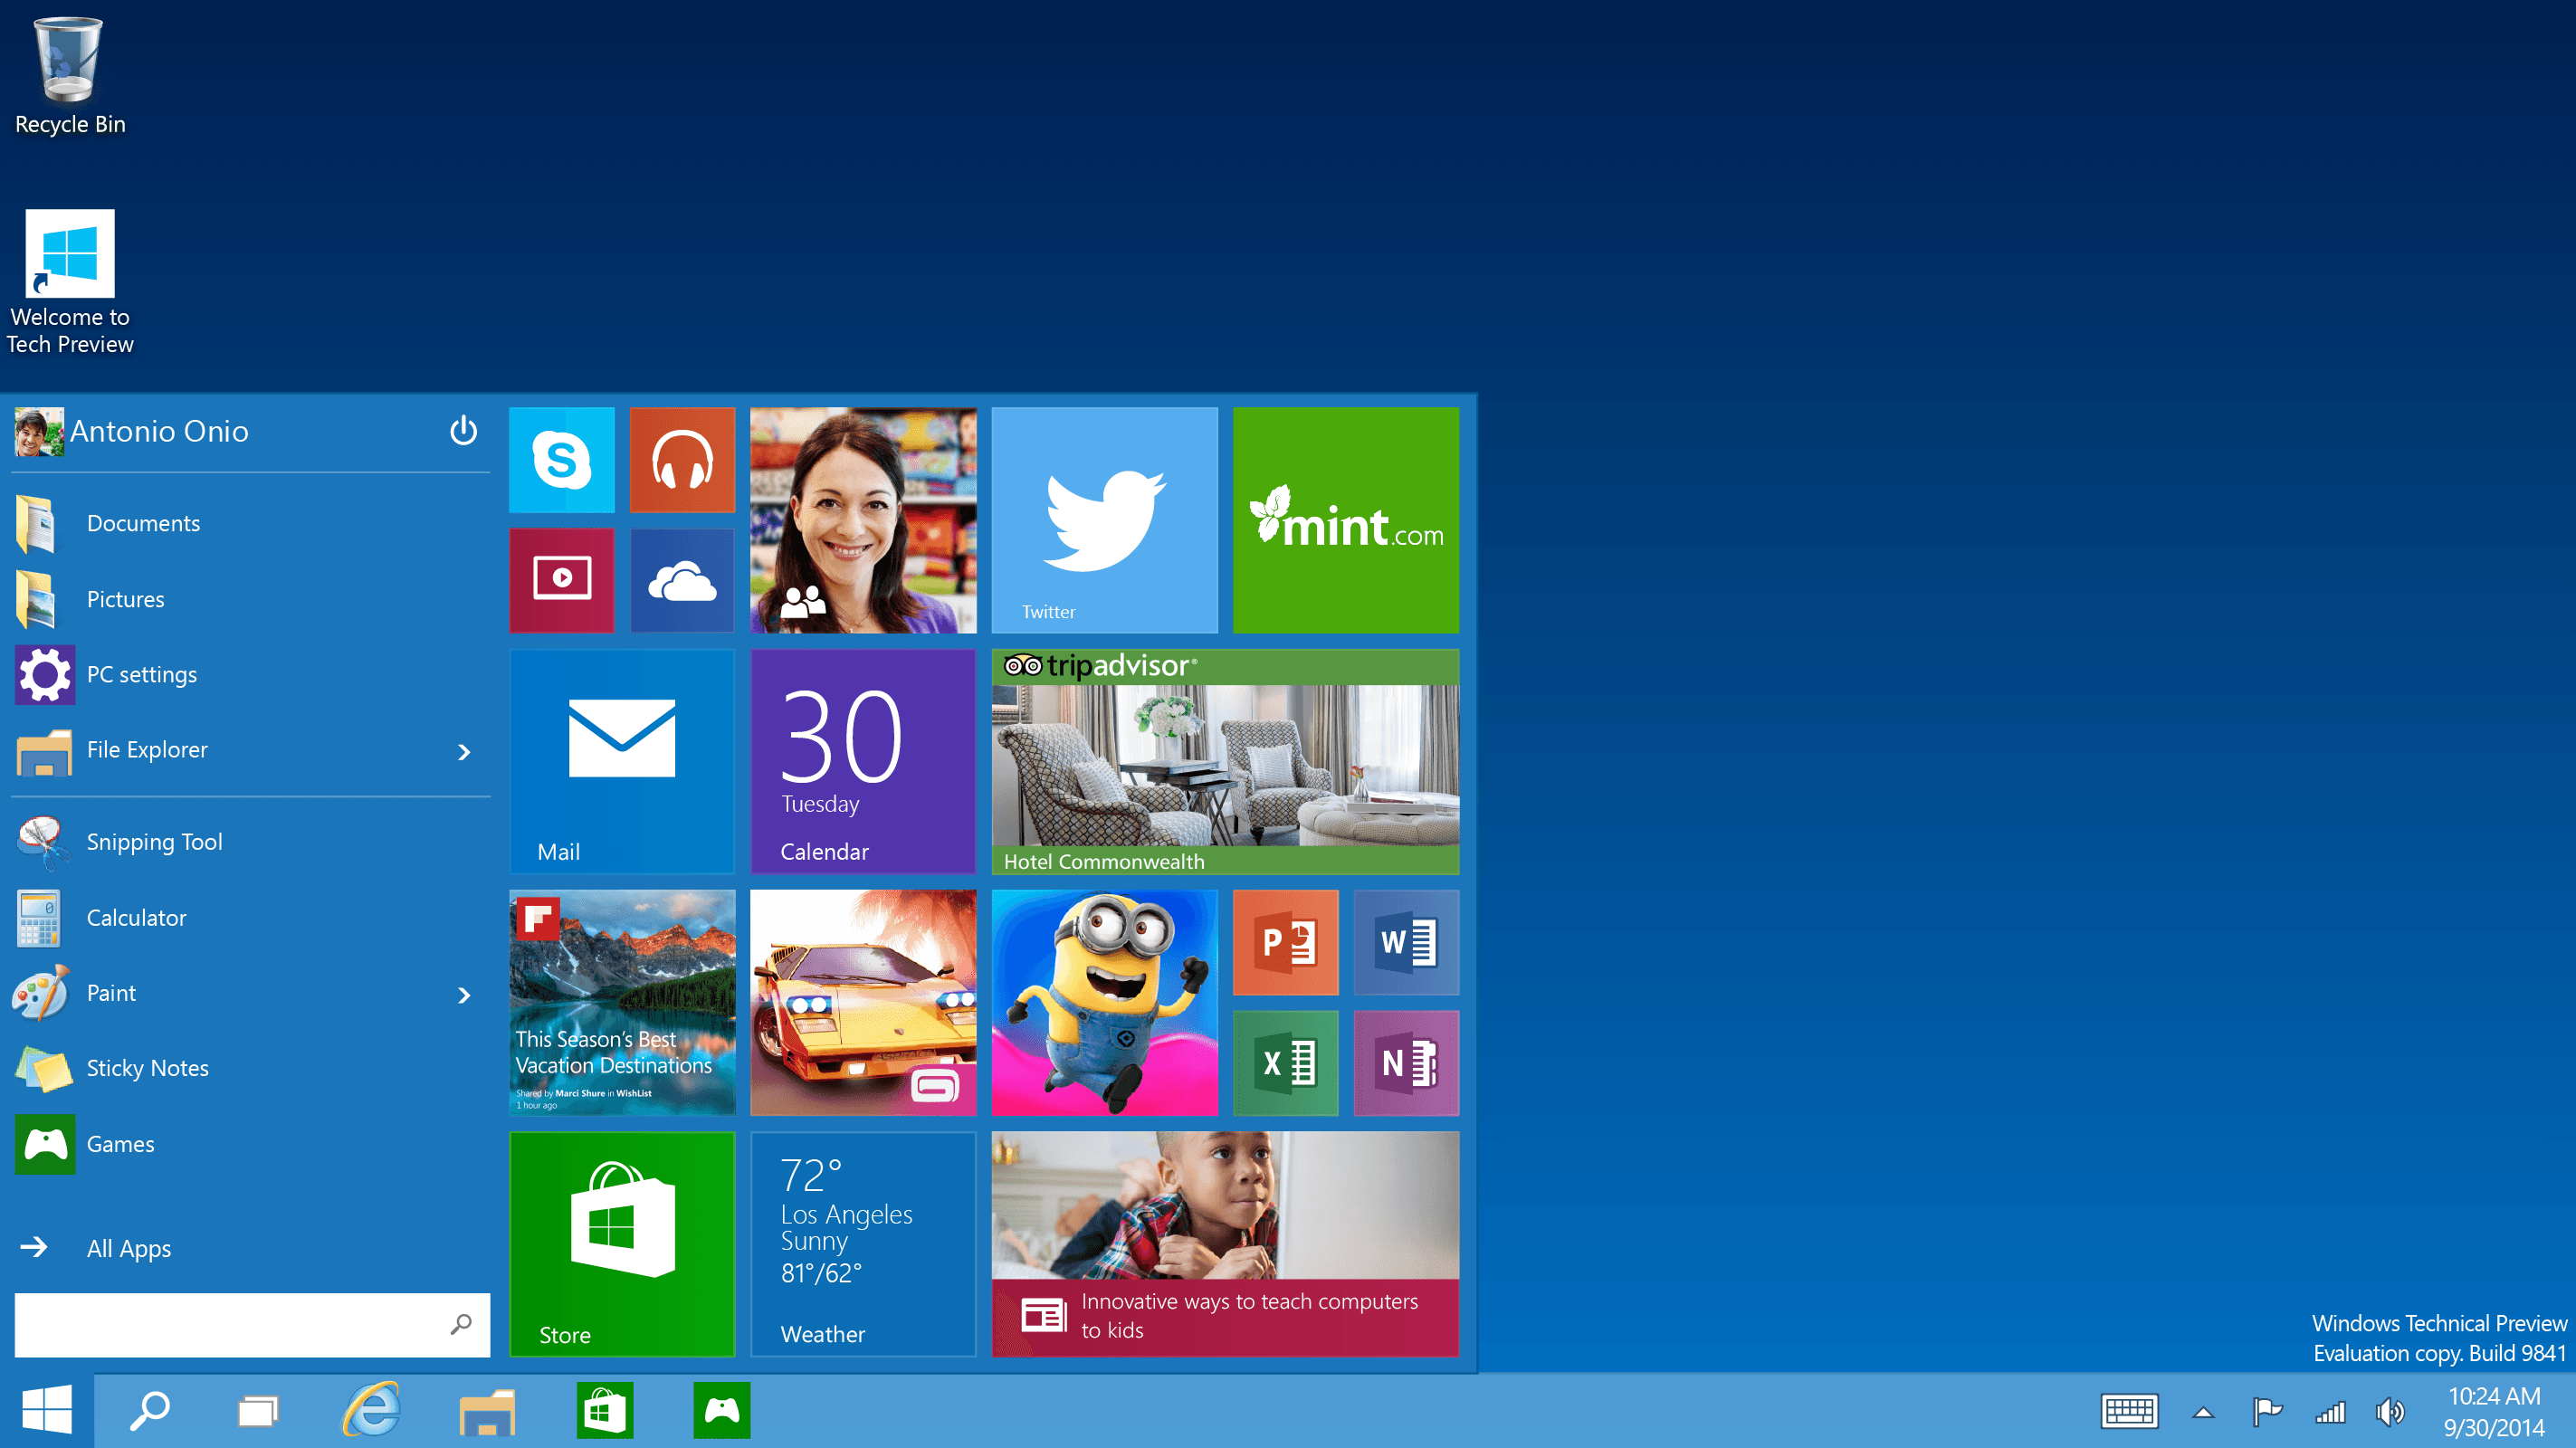 Windows 10 mit neuem Startmenü